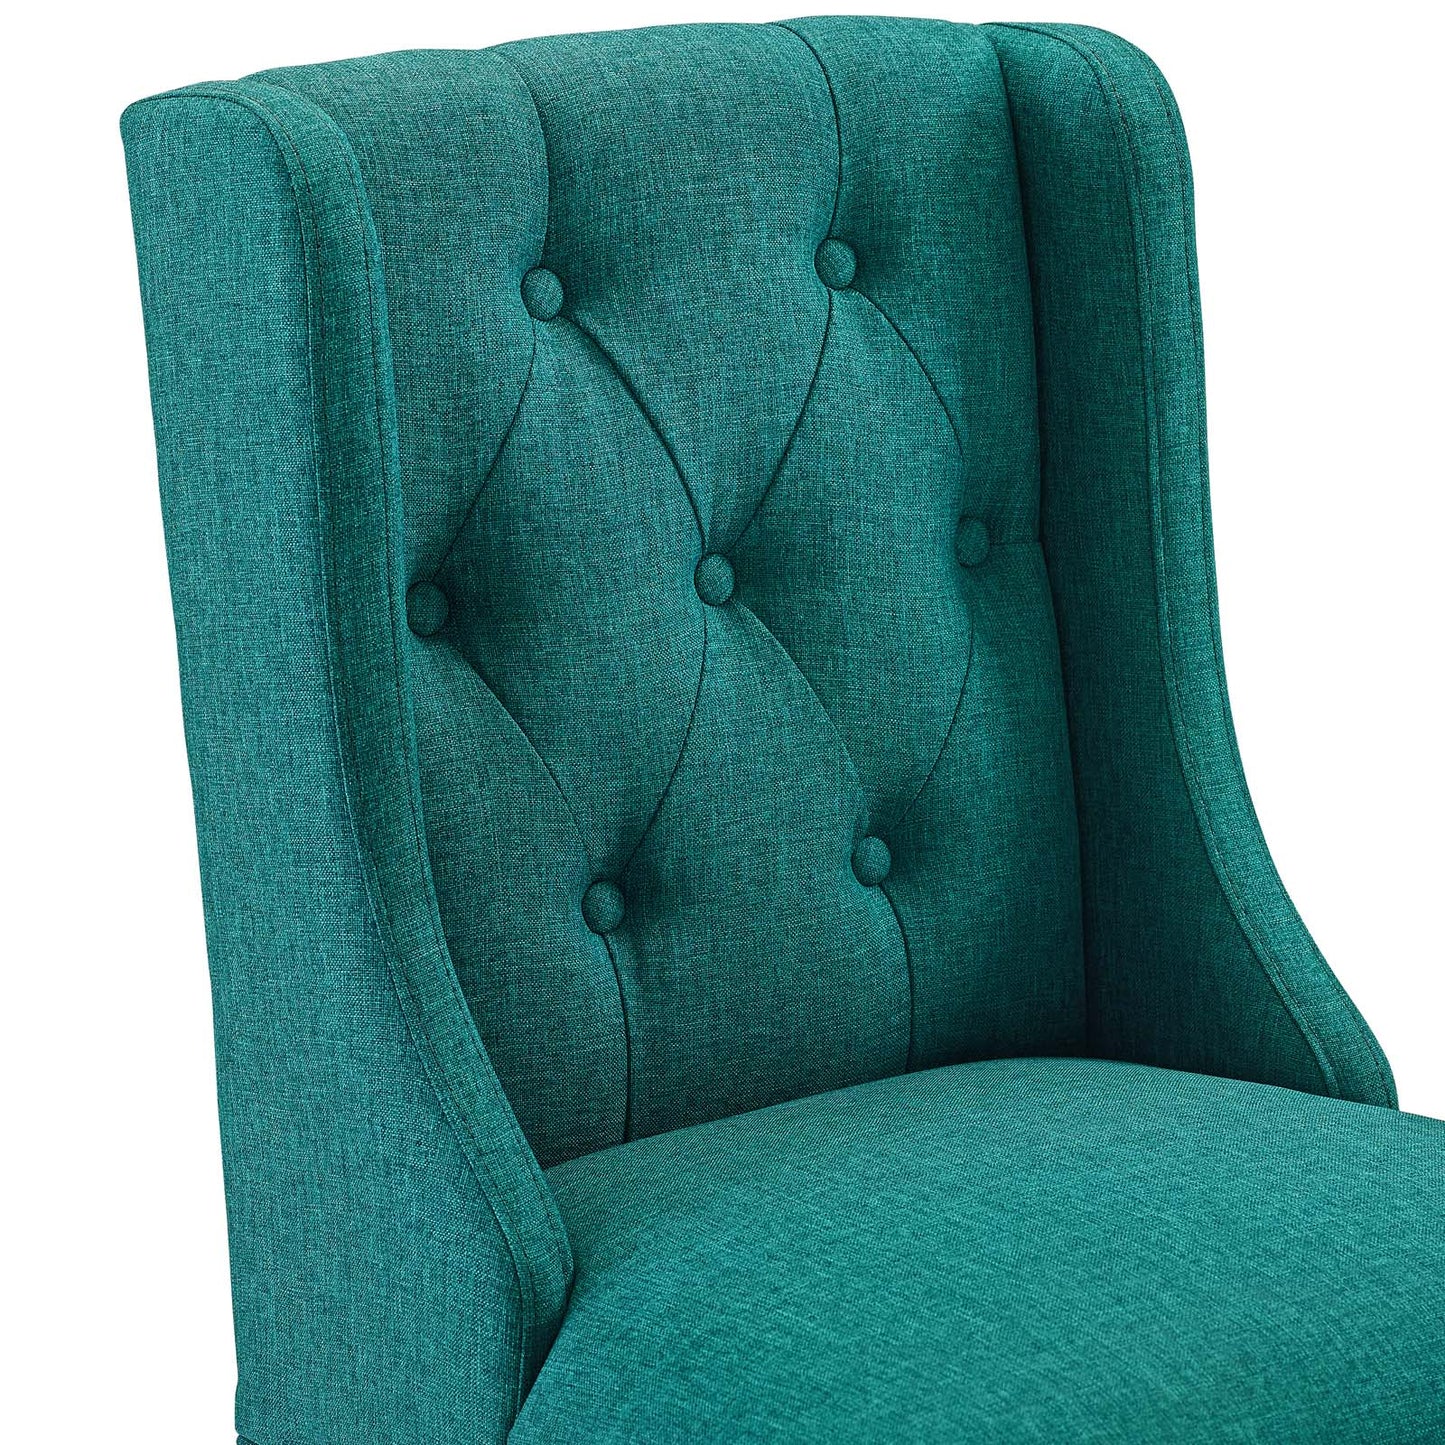 Baronet Counter Bar Stool Upholstered Fabric Set of 2 Teal EEI-4020-TEA